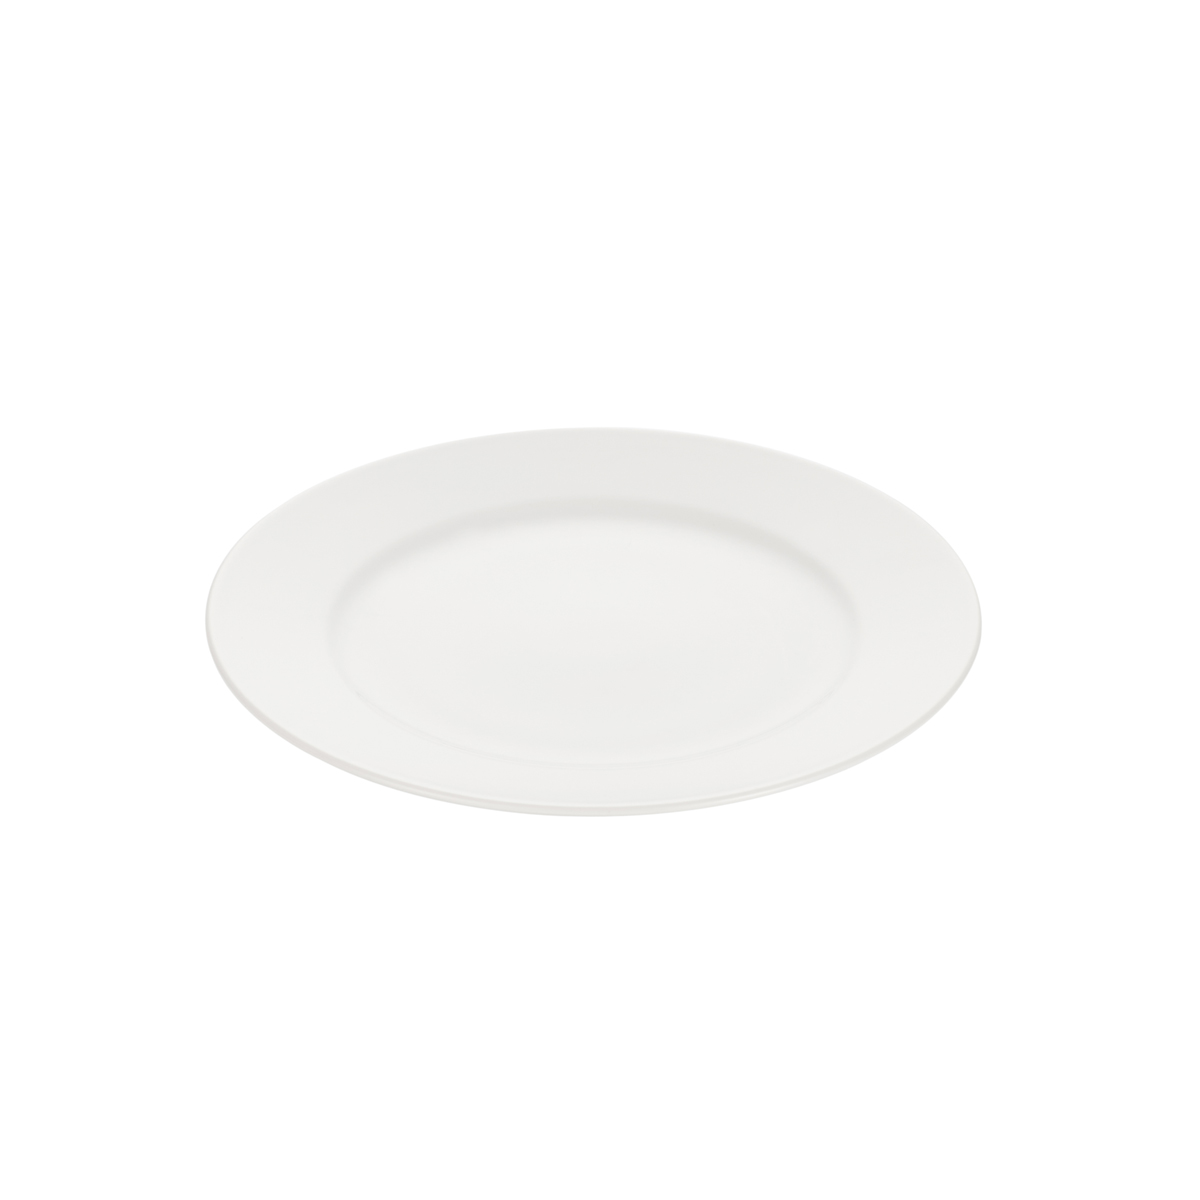 Плоская тарелка Gipfel Classique 50905 25 см плоская тарелка gipfel classique 50906 27 см